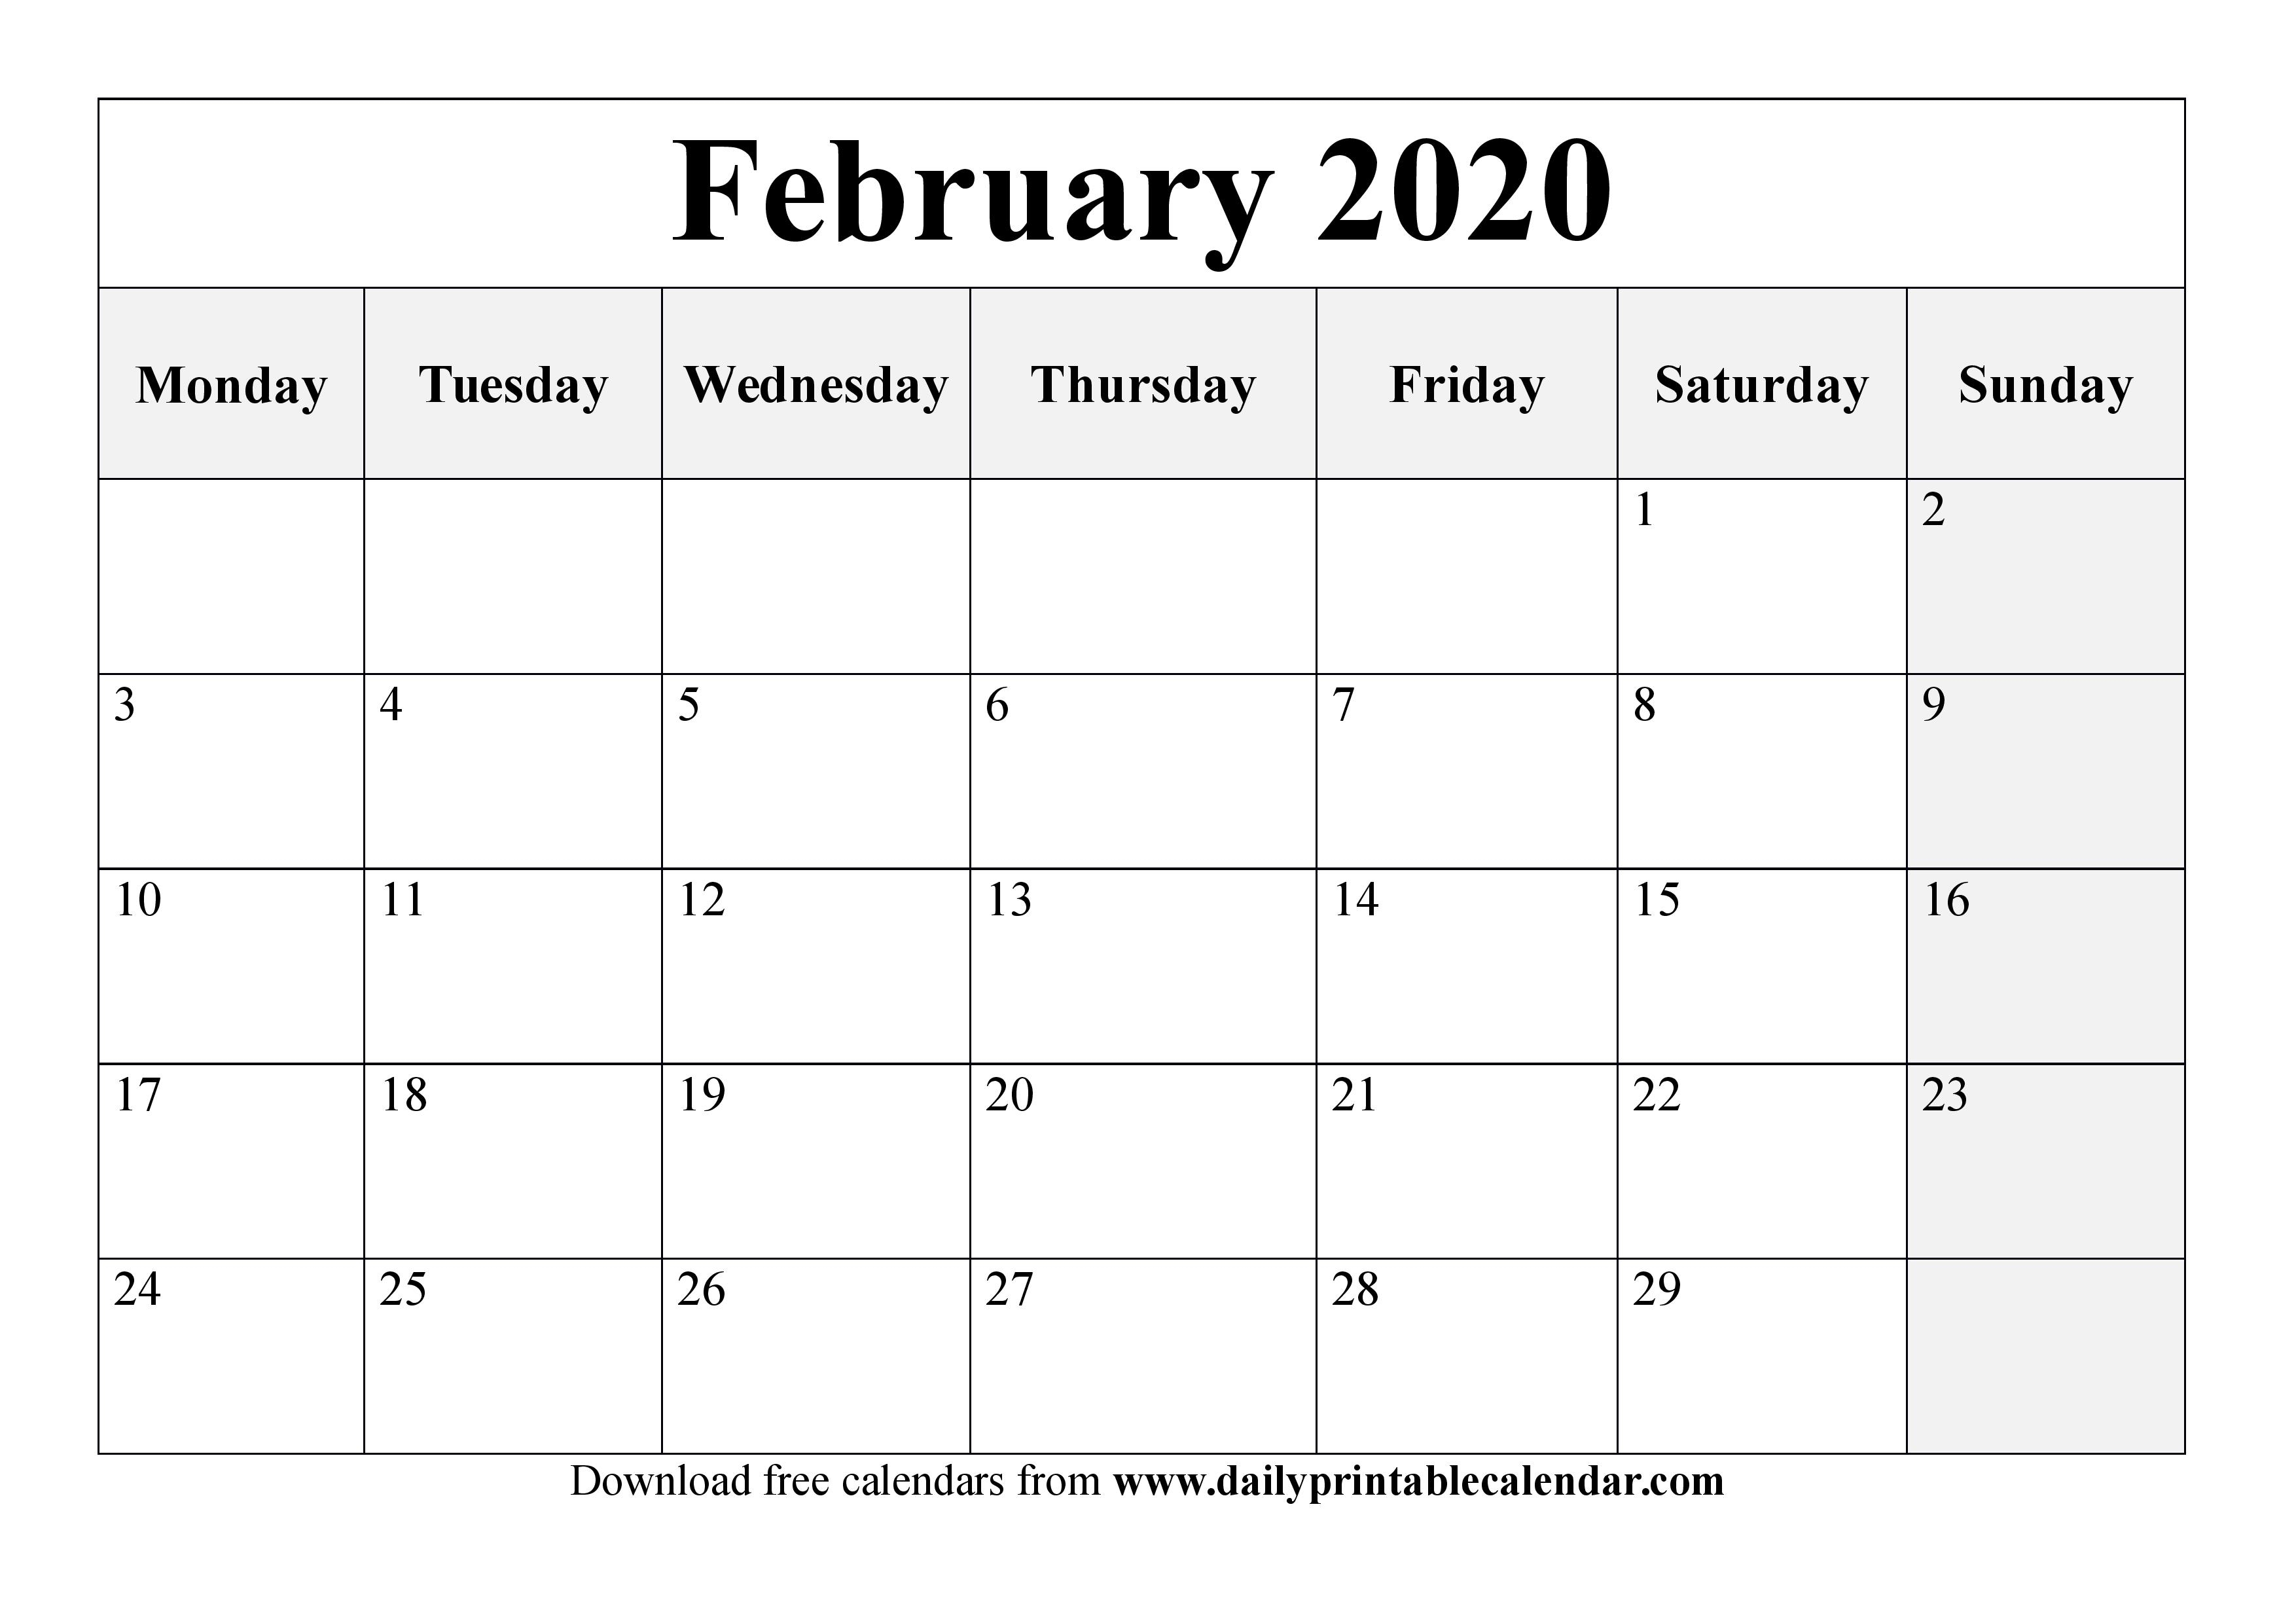 February 2020 Calendar Printable - Blank Templates - 2020